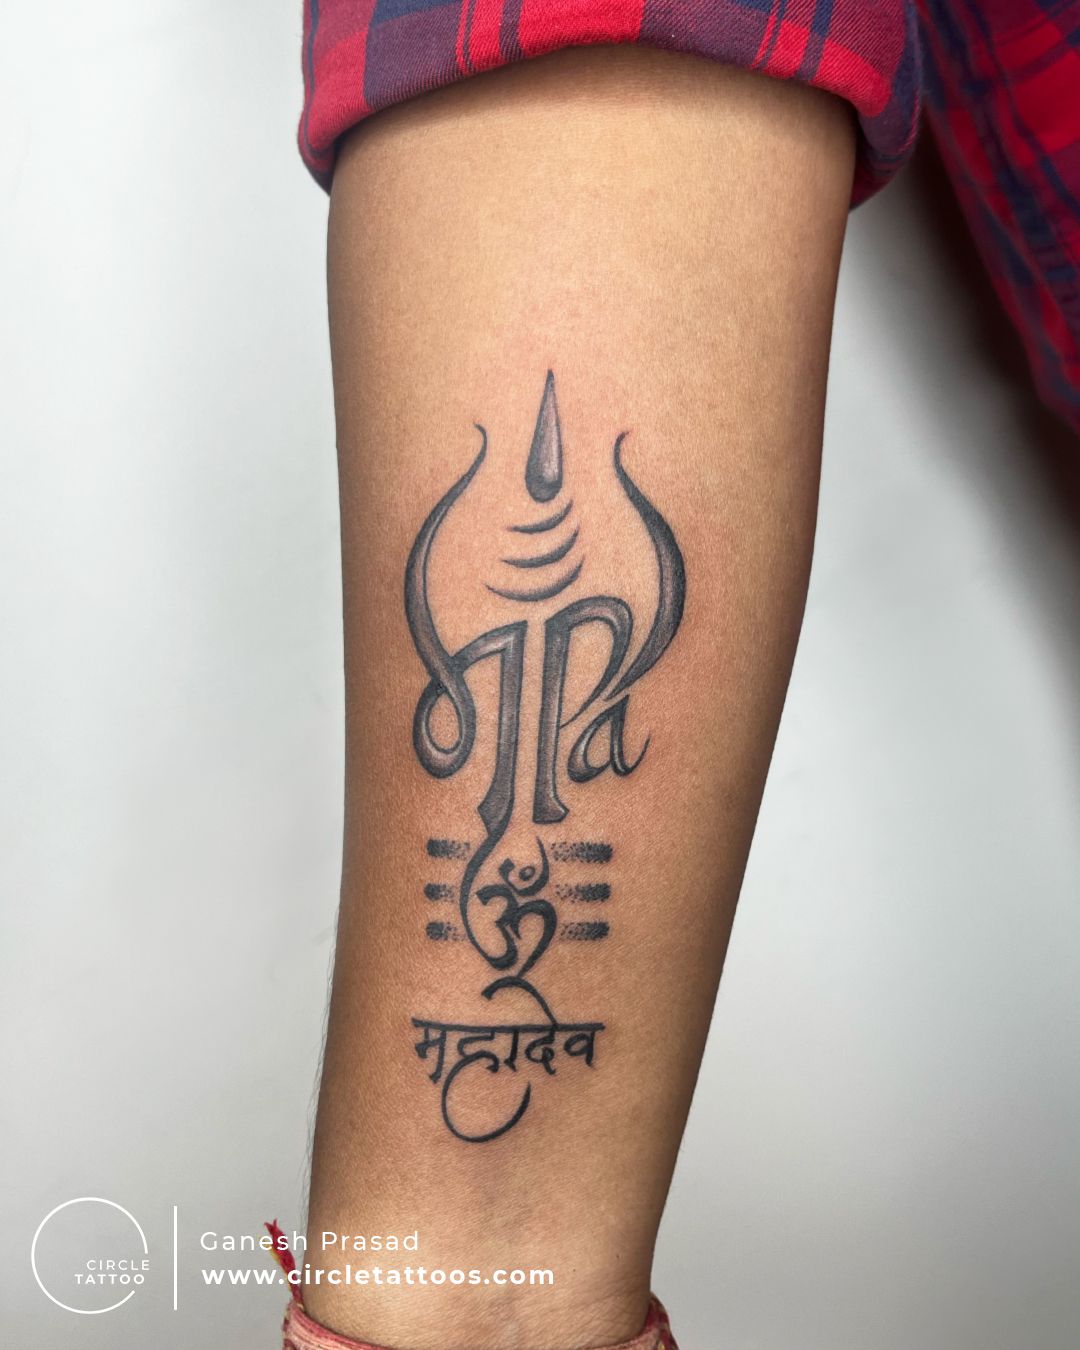 Calligraphy Tattoo made by Ganesh Prasad at Circle Tattoo Bangalore :  u/circletattooindia